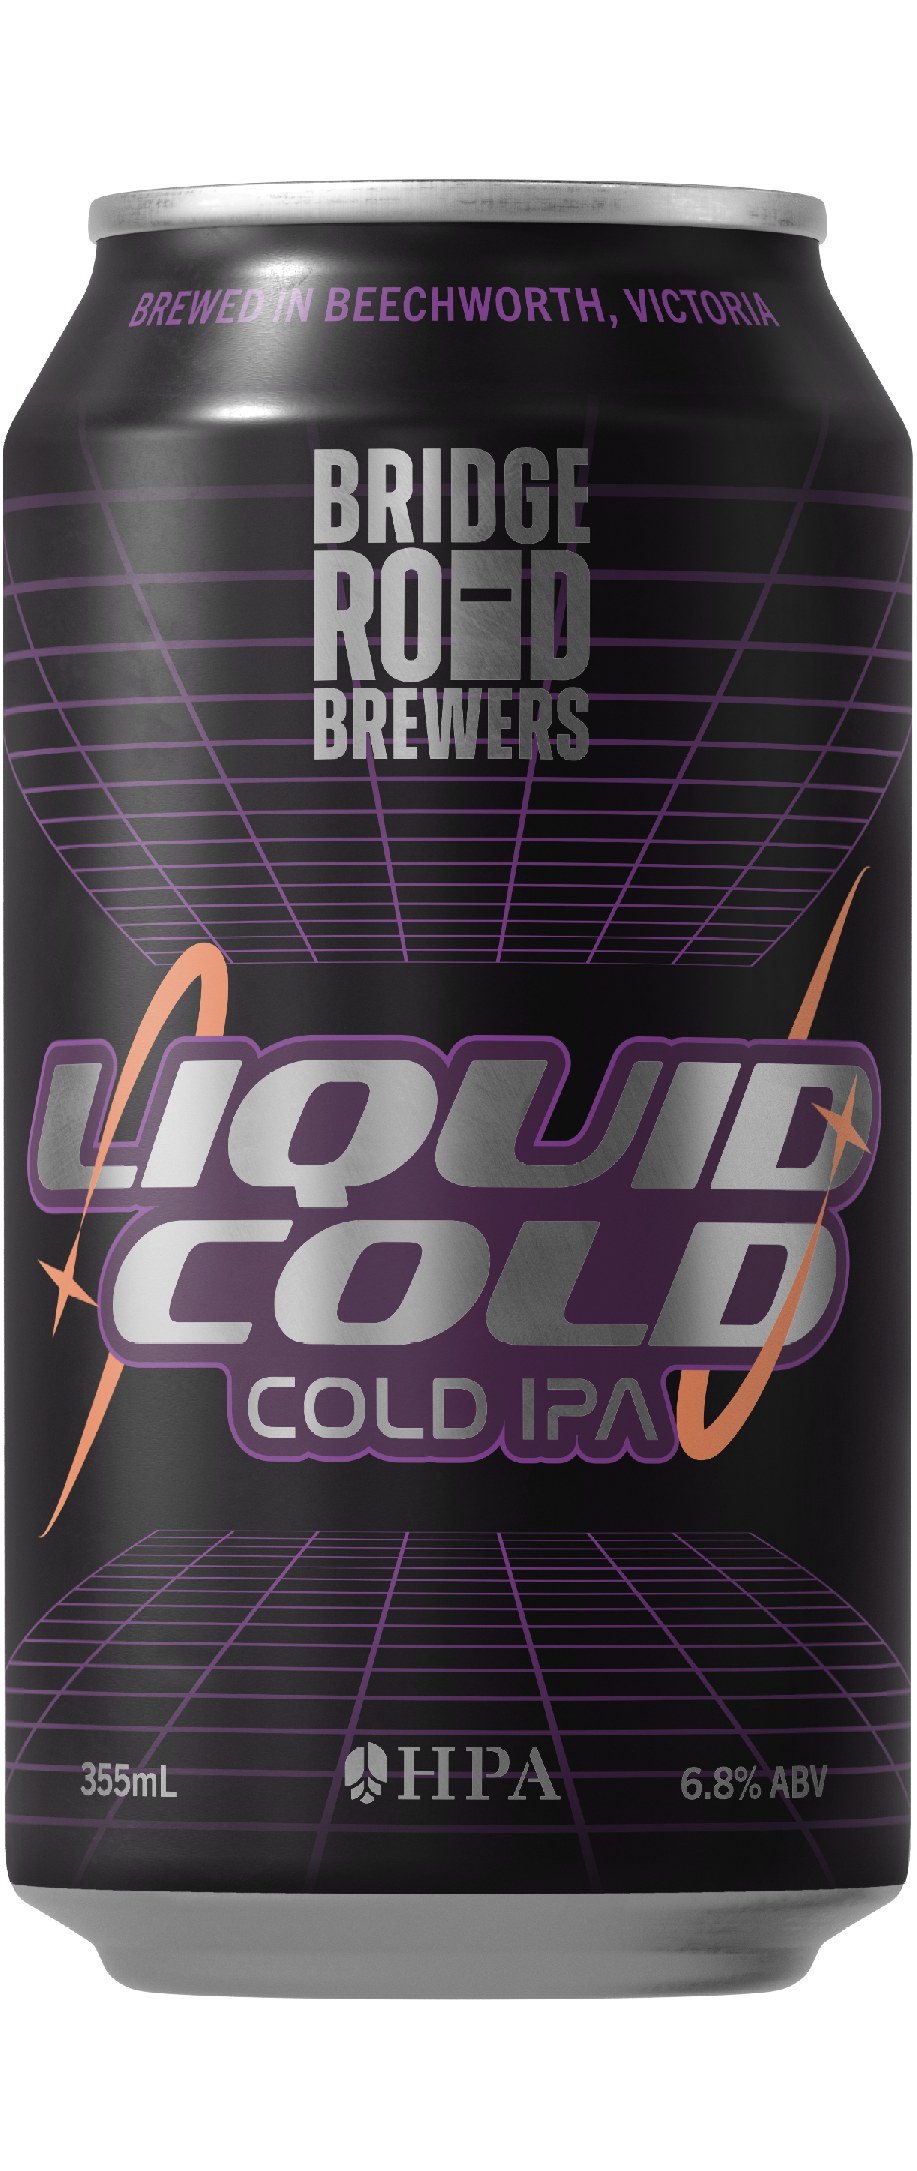 Liquid Cold - Cold IPA